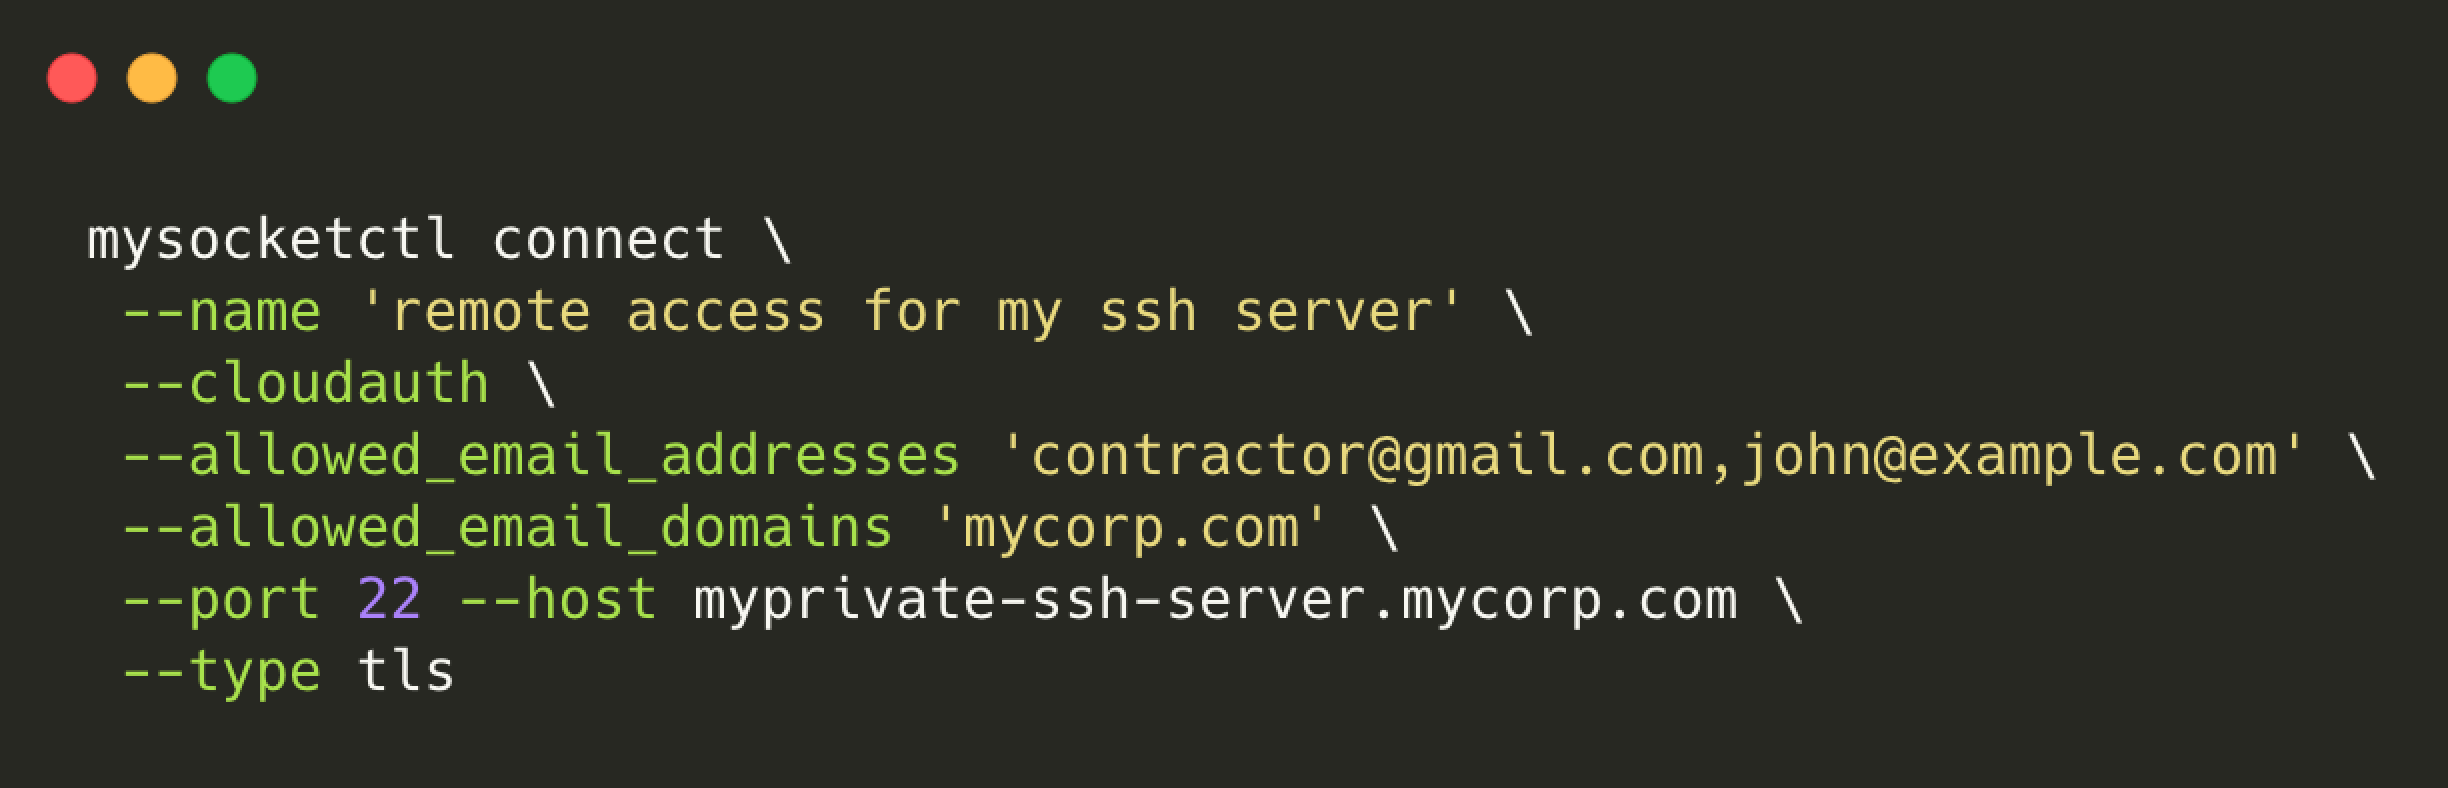 Introducing SSH zero trust, Identity aware TCP sockets